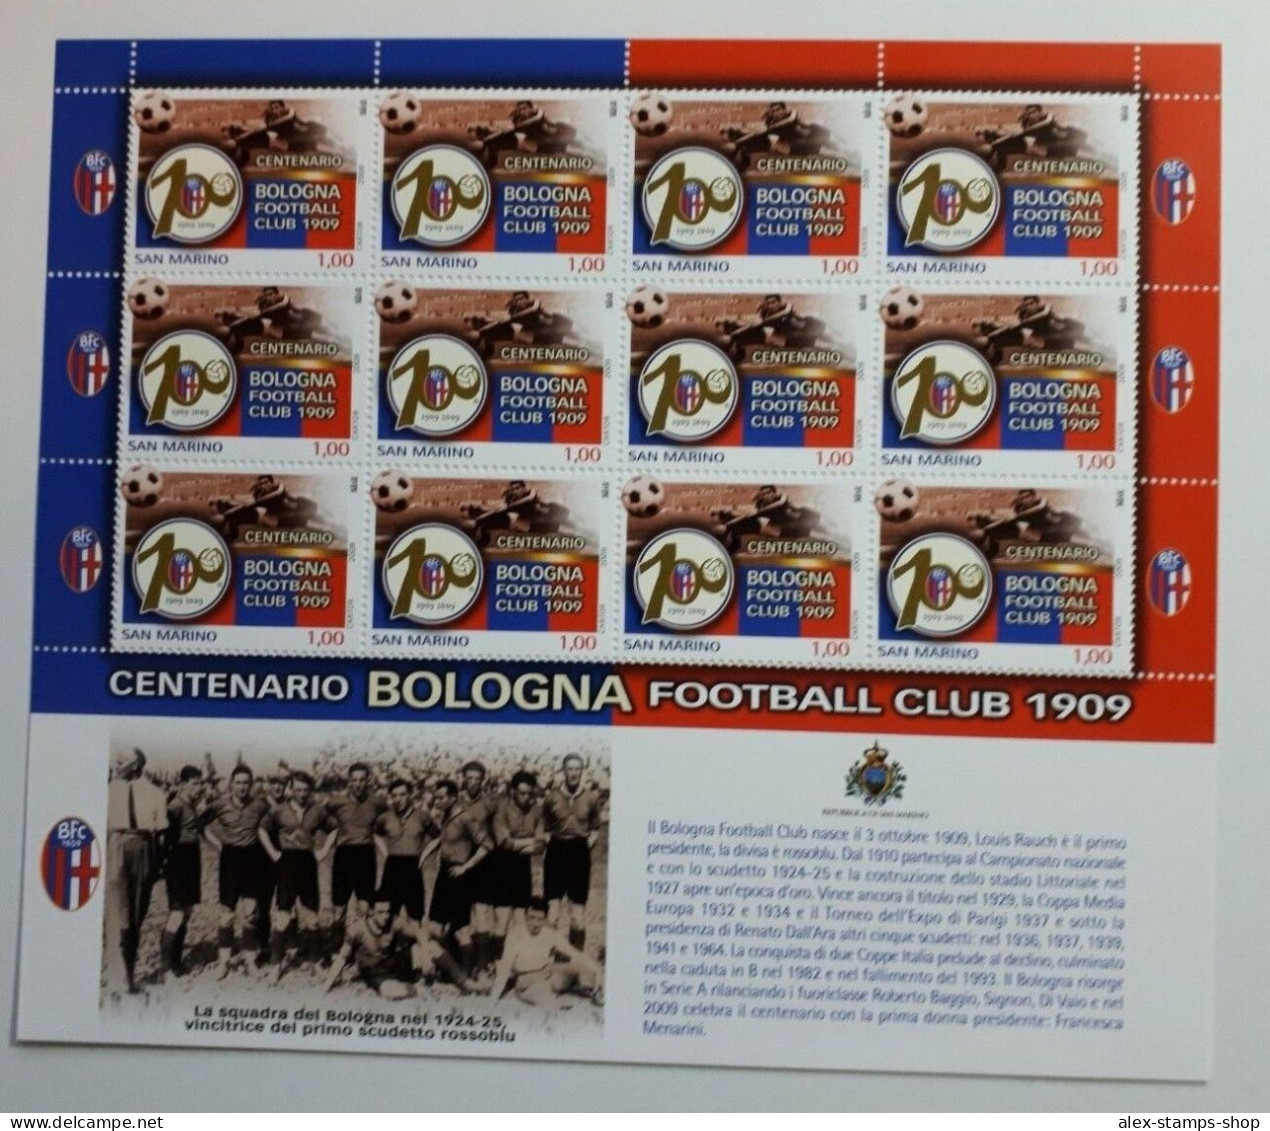 SAN MARINO 2009 MINIFOGLIO - CENTENARIO BOLOGNA FOOTBALL CLUB 1909 NEW SHEET - Blocs-feuillets